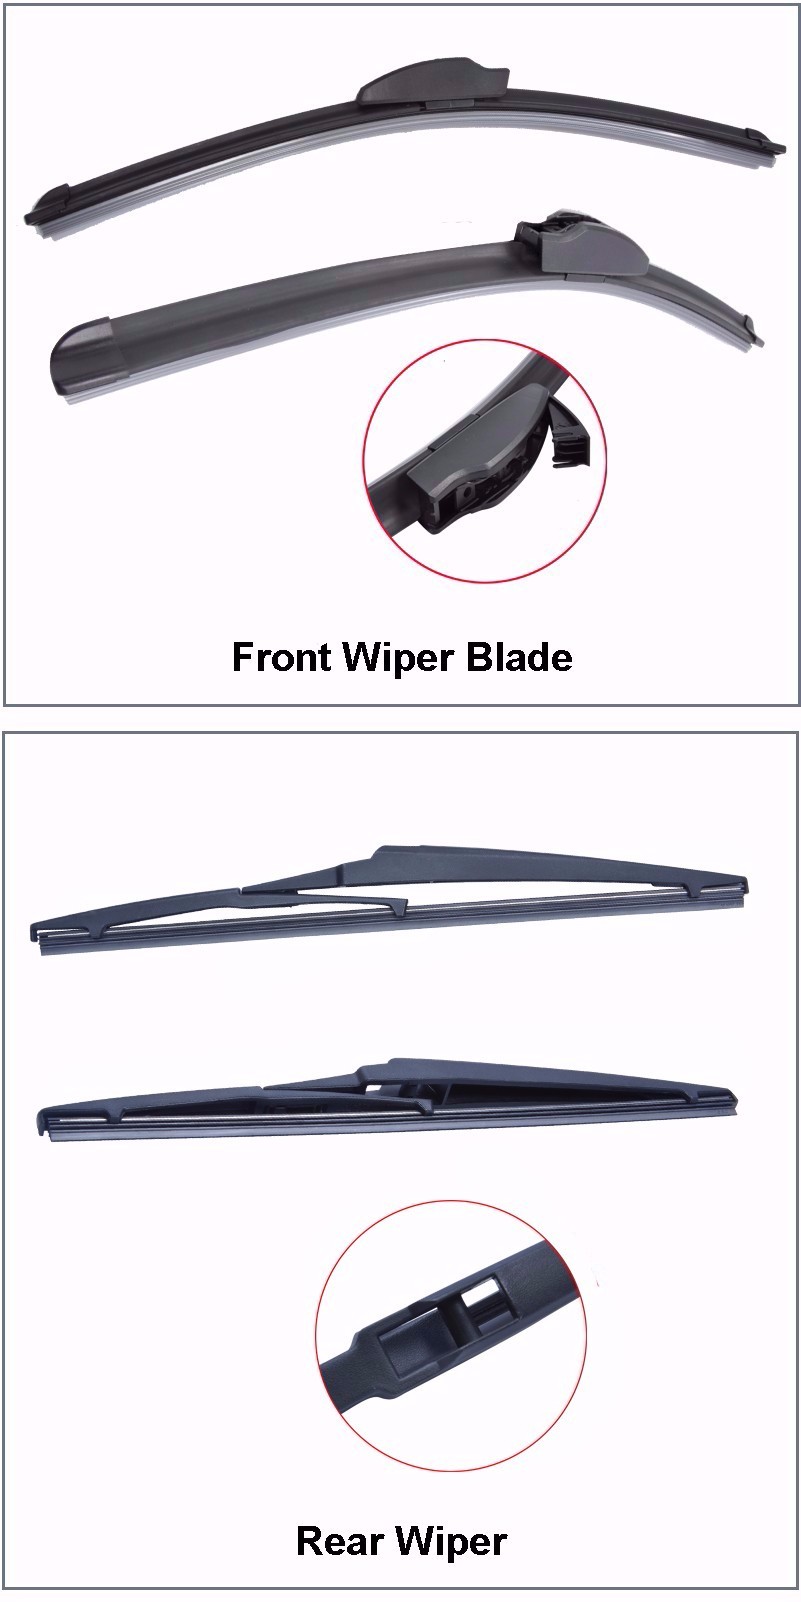 KIT Rubber Windscreen Front And Rear Wiper Blades For Suzuki Grand Vitara,2005 2016.Windshield 2006 Suzuki Grand Vitara Wiper Blade Size